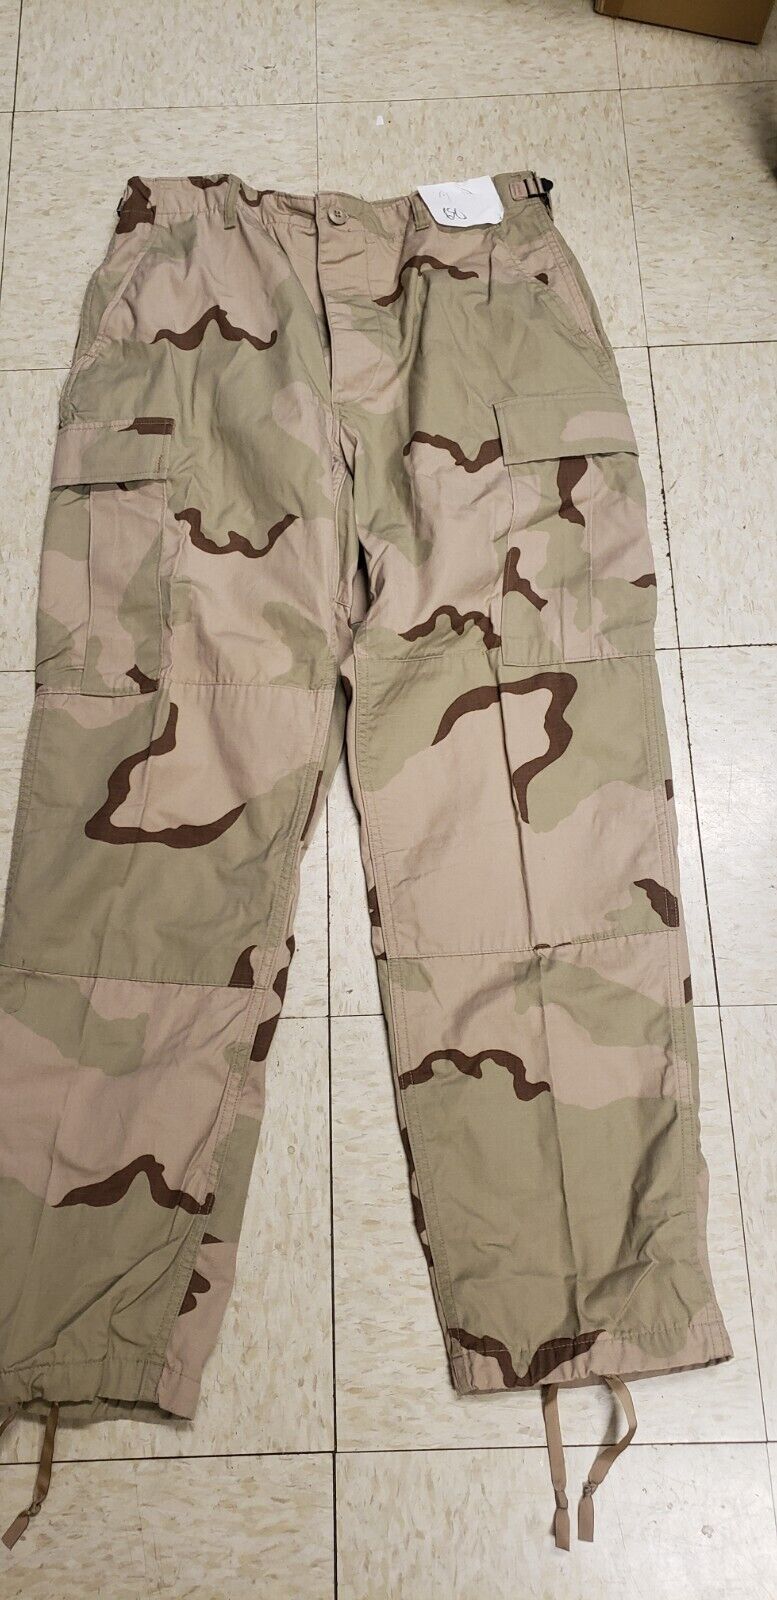 US Military Issue Desert DCU Camouflage Combat Pants Trousers Size medium regula